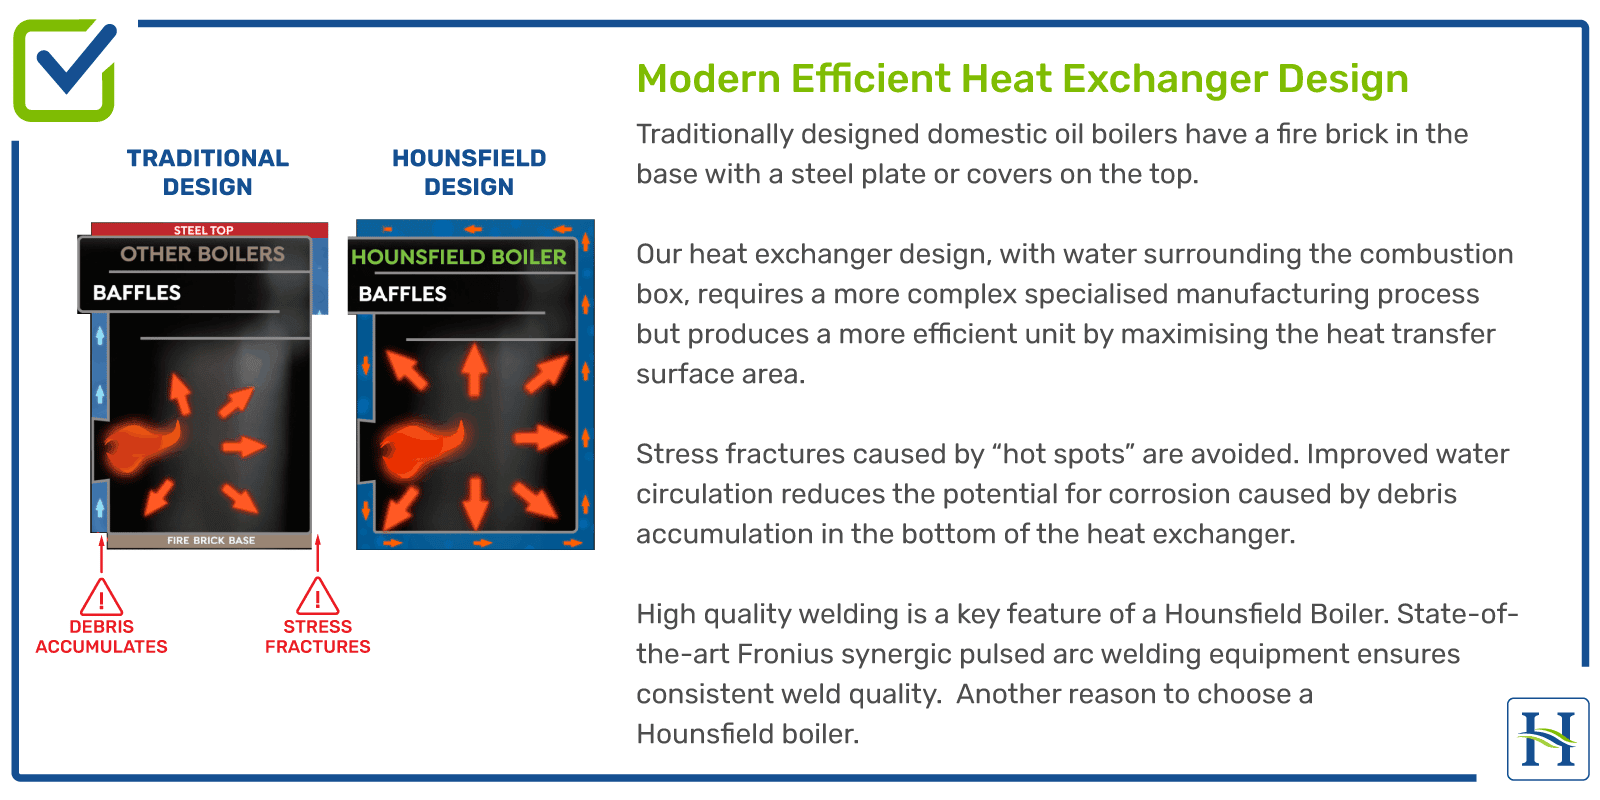 Heat Exchanger Design for Oil Boilers